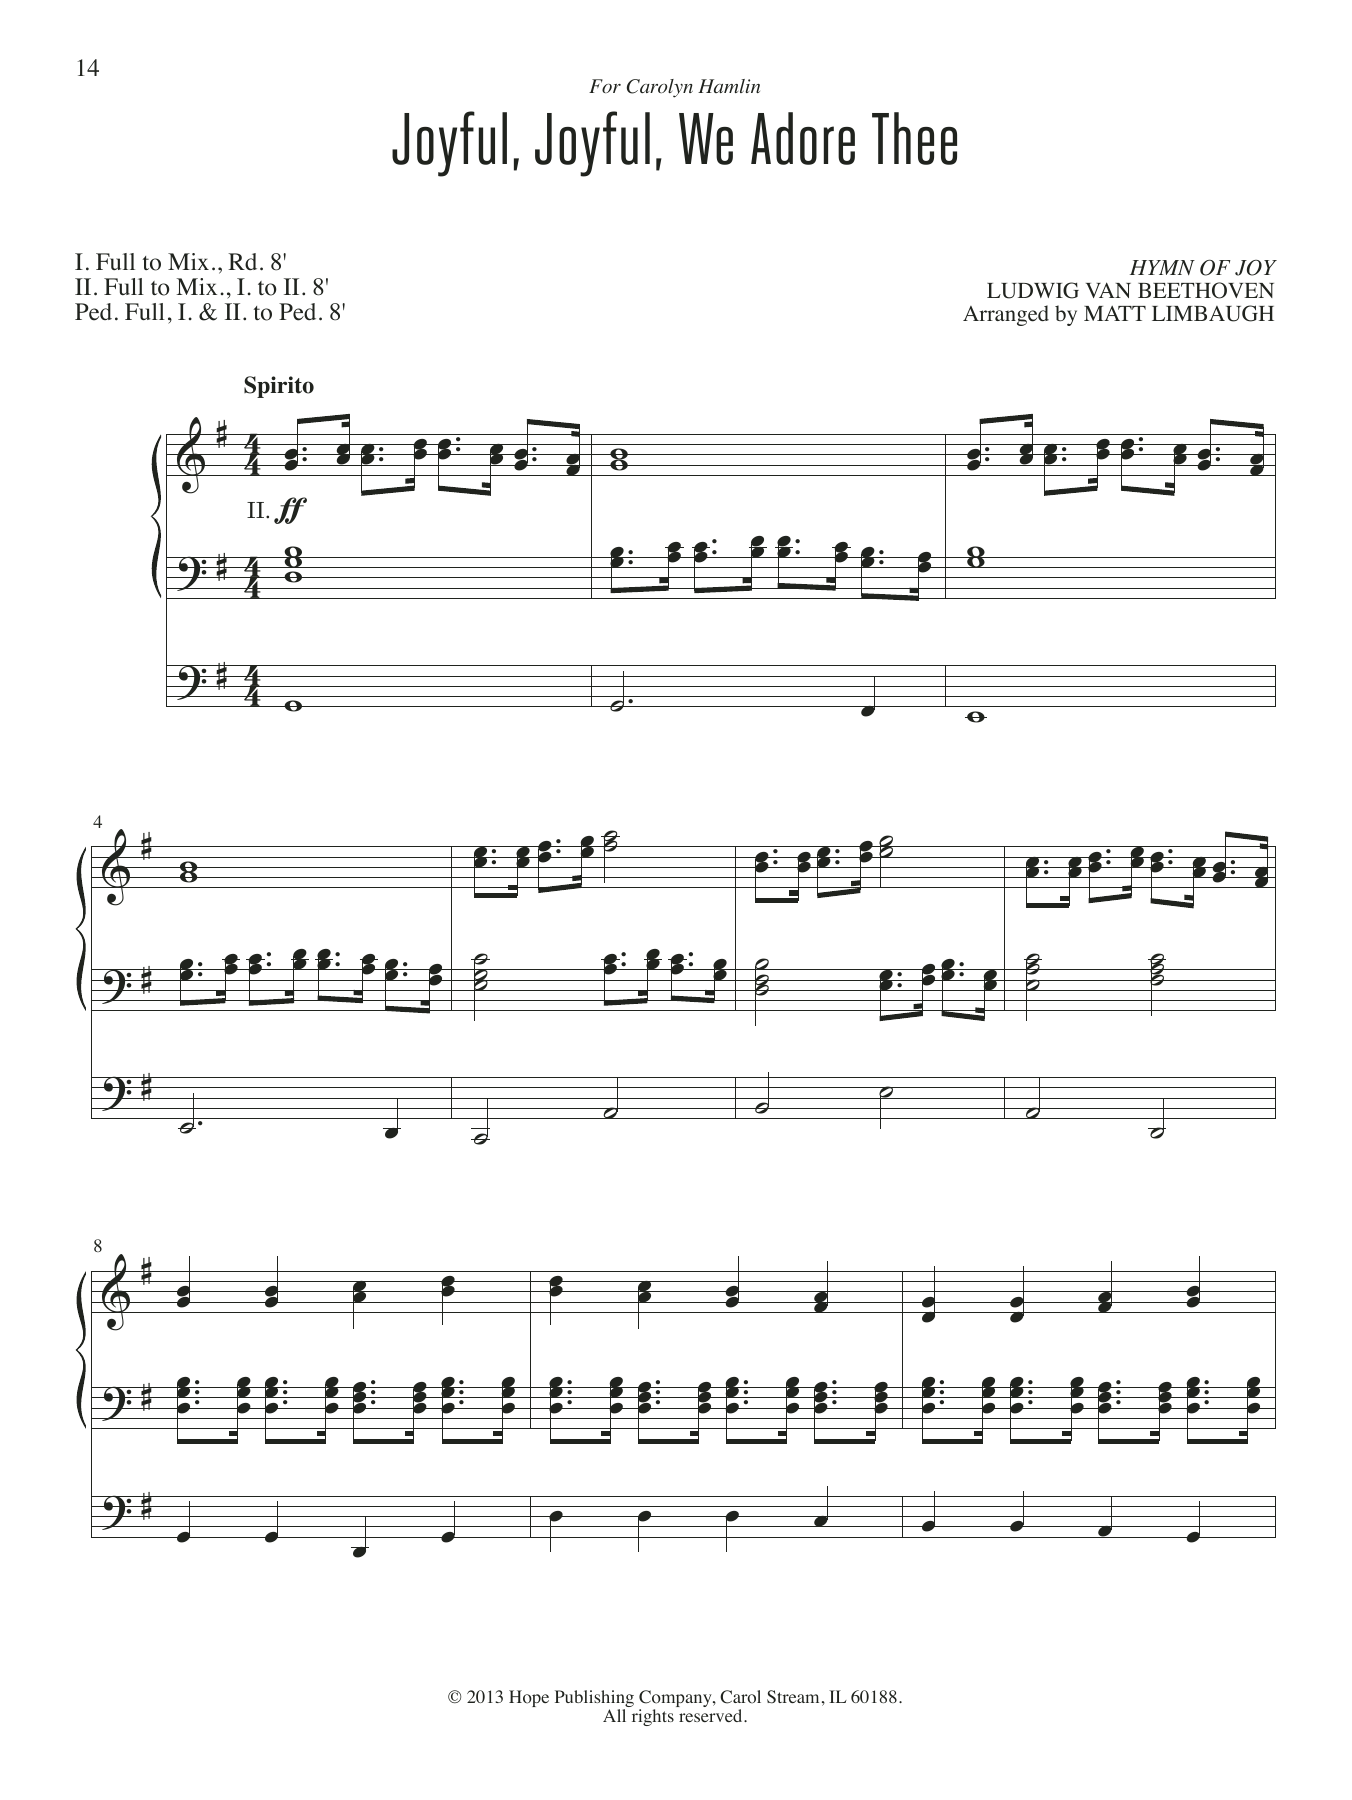 Download Matt Limbaugh Joyful, Joyful, We Adore Thee Sheet Music and learn how to play Organ PDF digital score in minutes